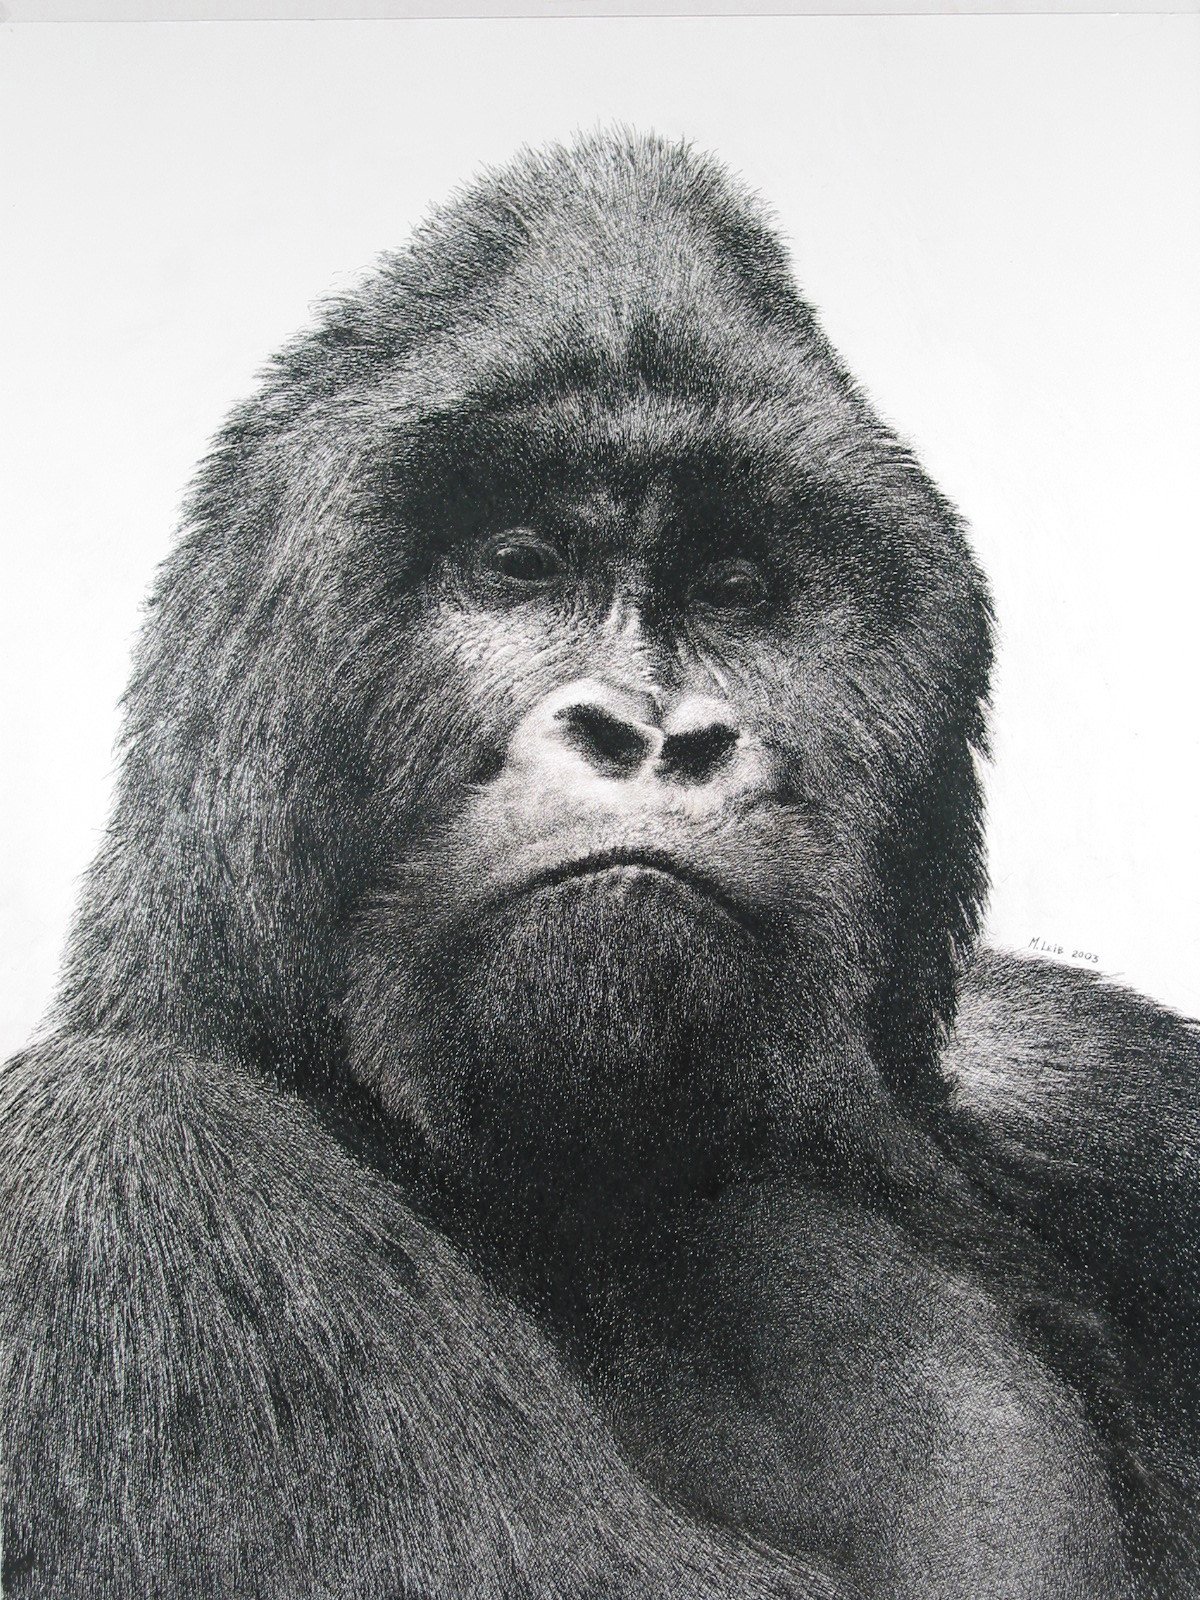 Gorilla G2-JPEG.jpg